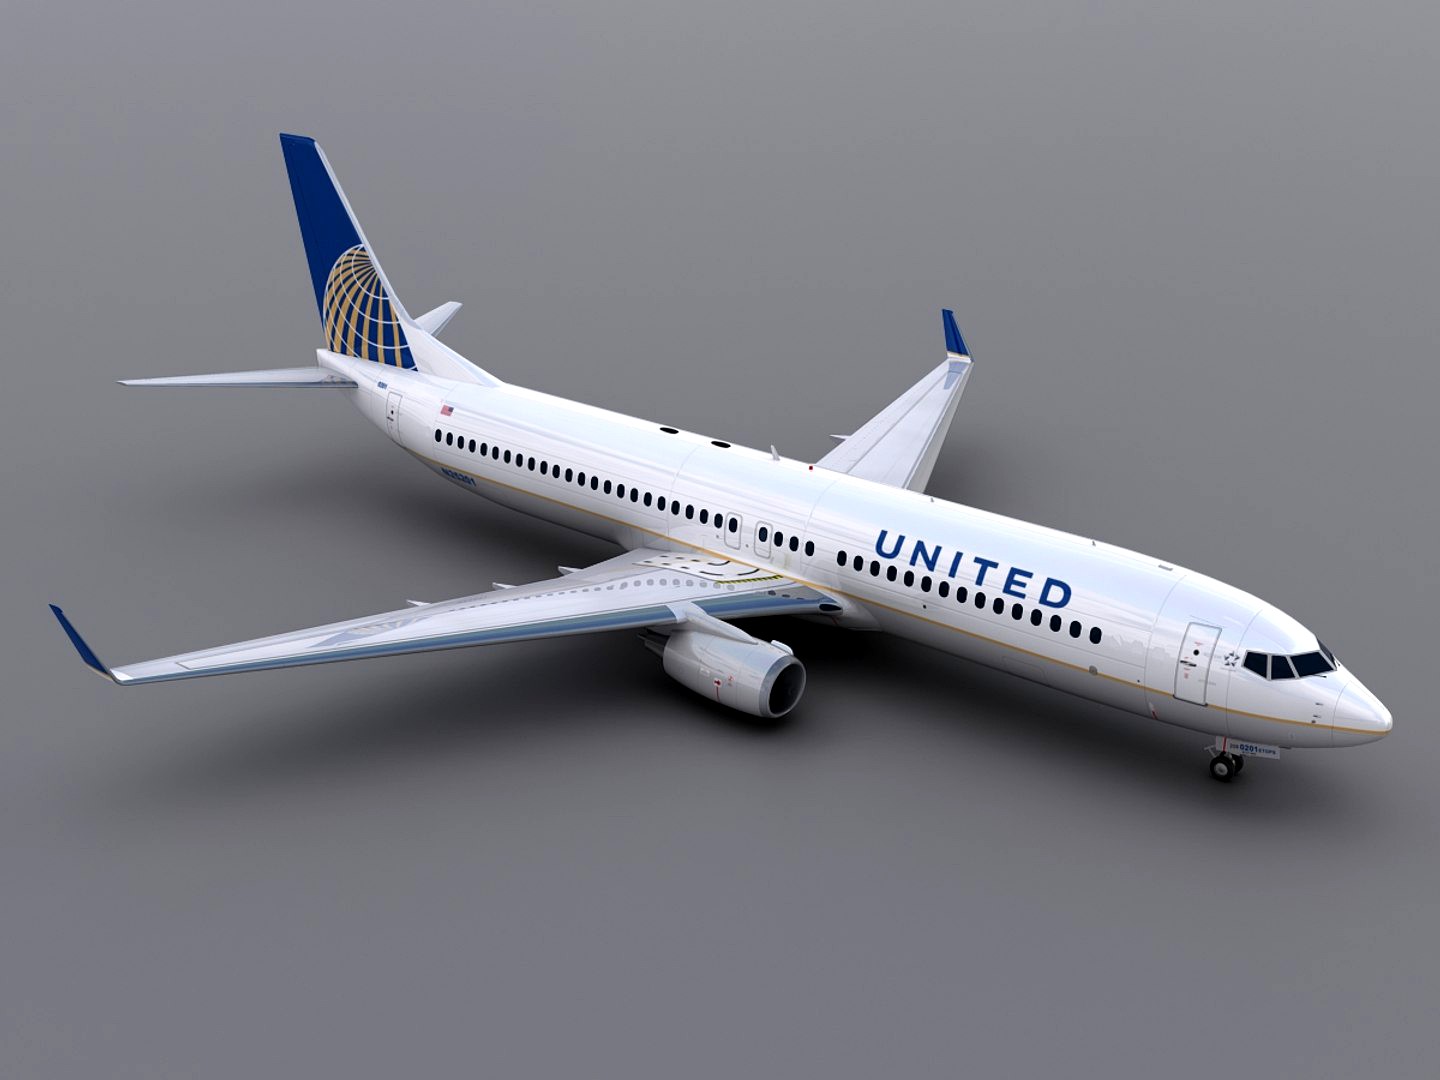 737-800 - United